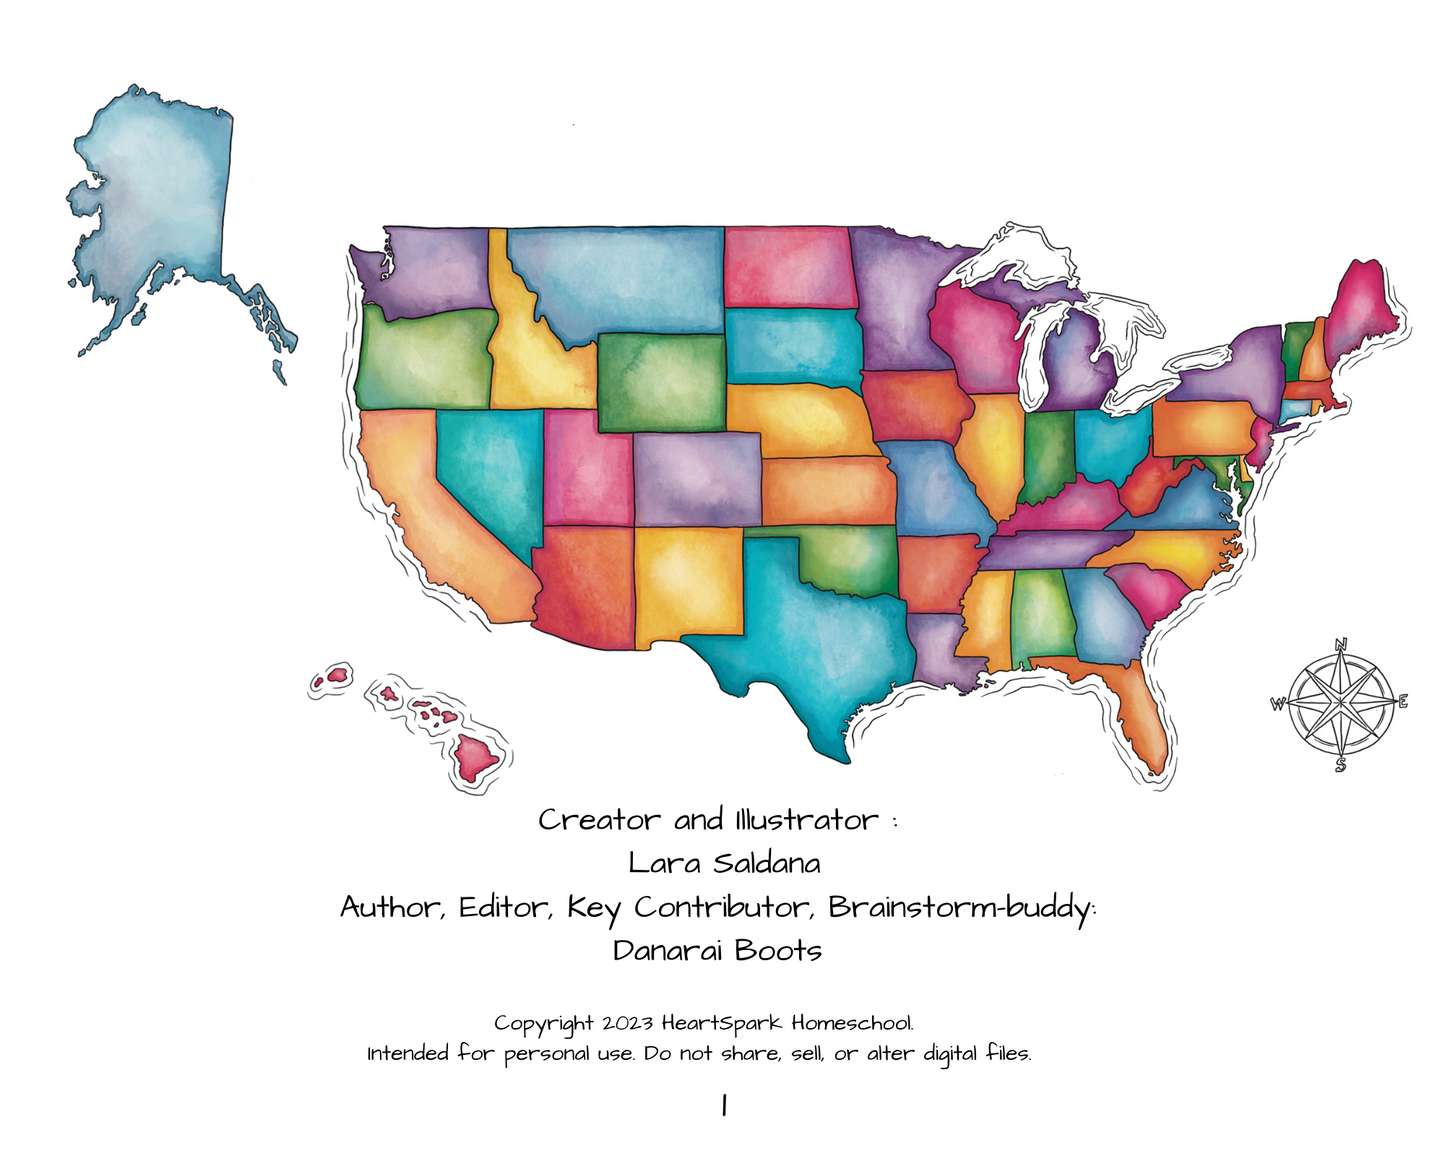 Our 50 States Full Unit Study: NORTHWEST